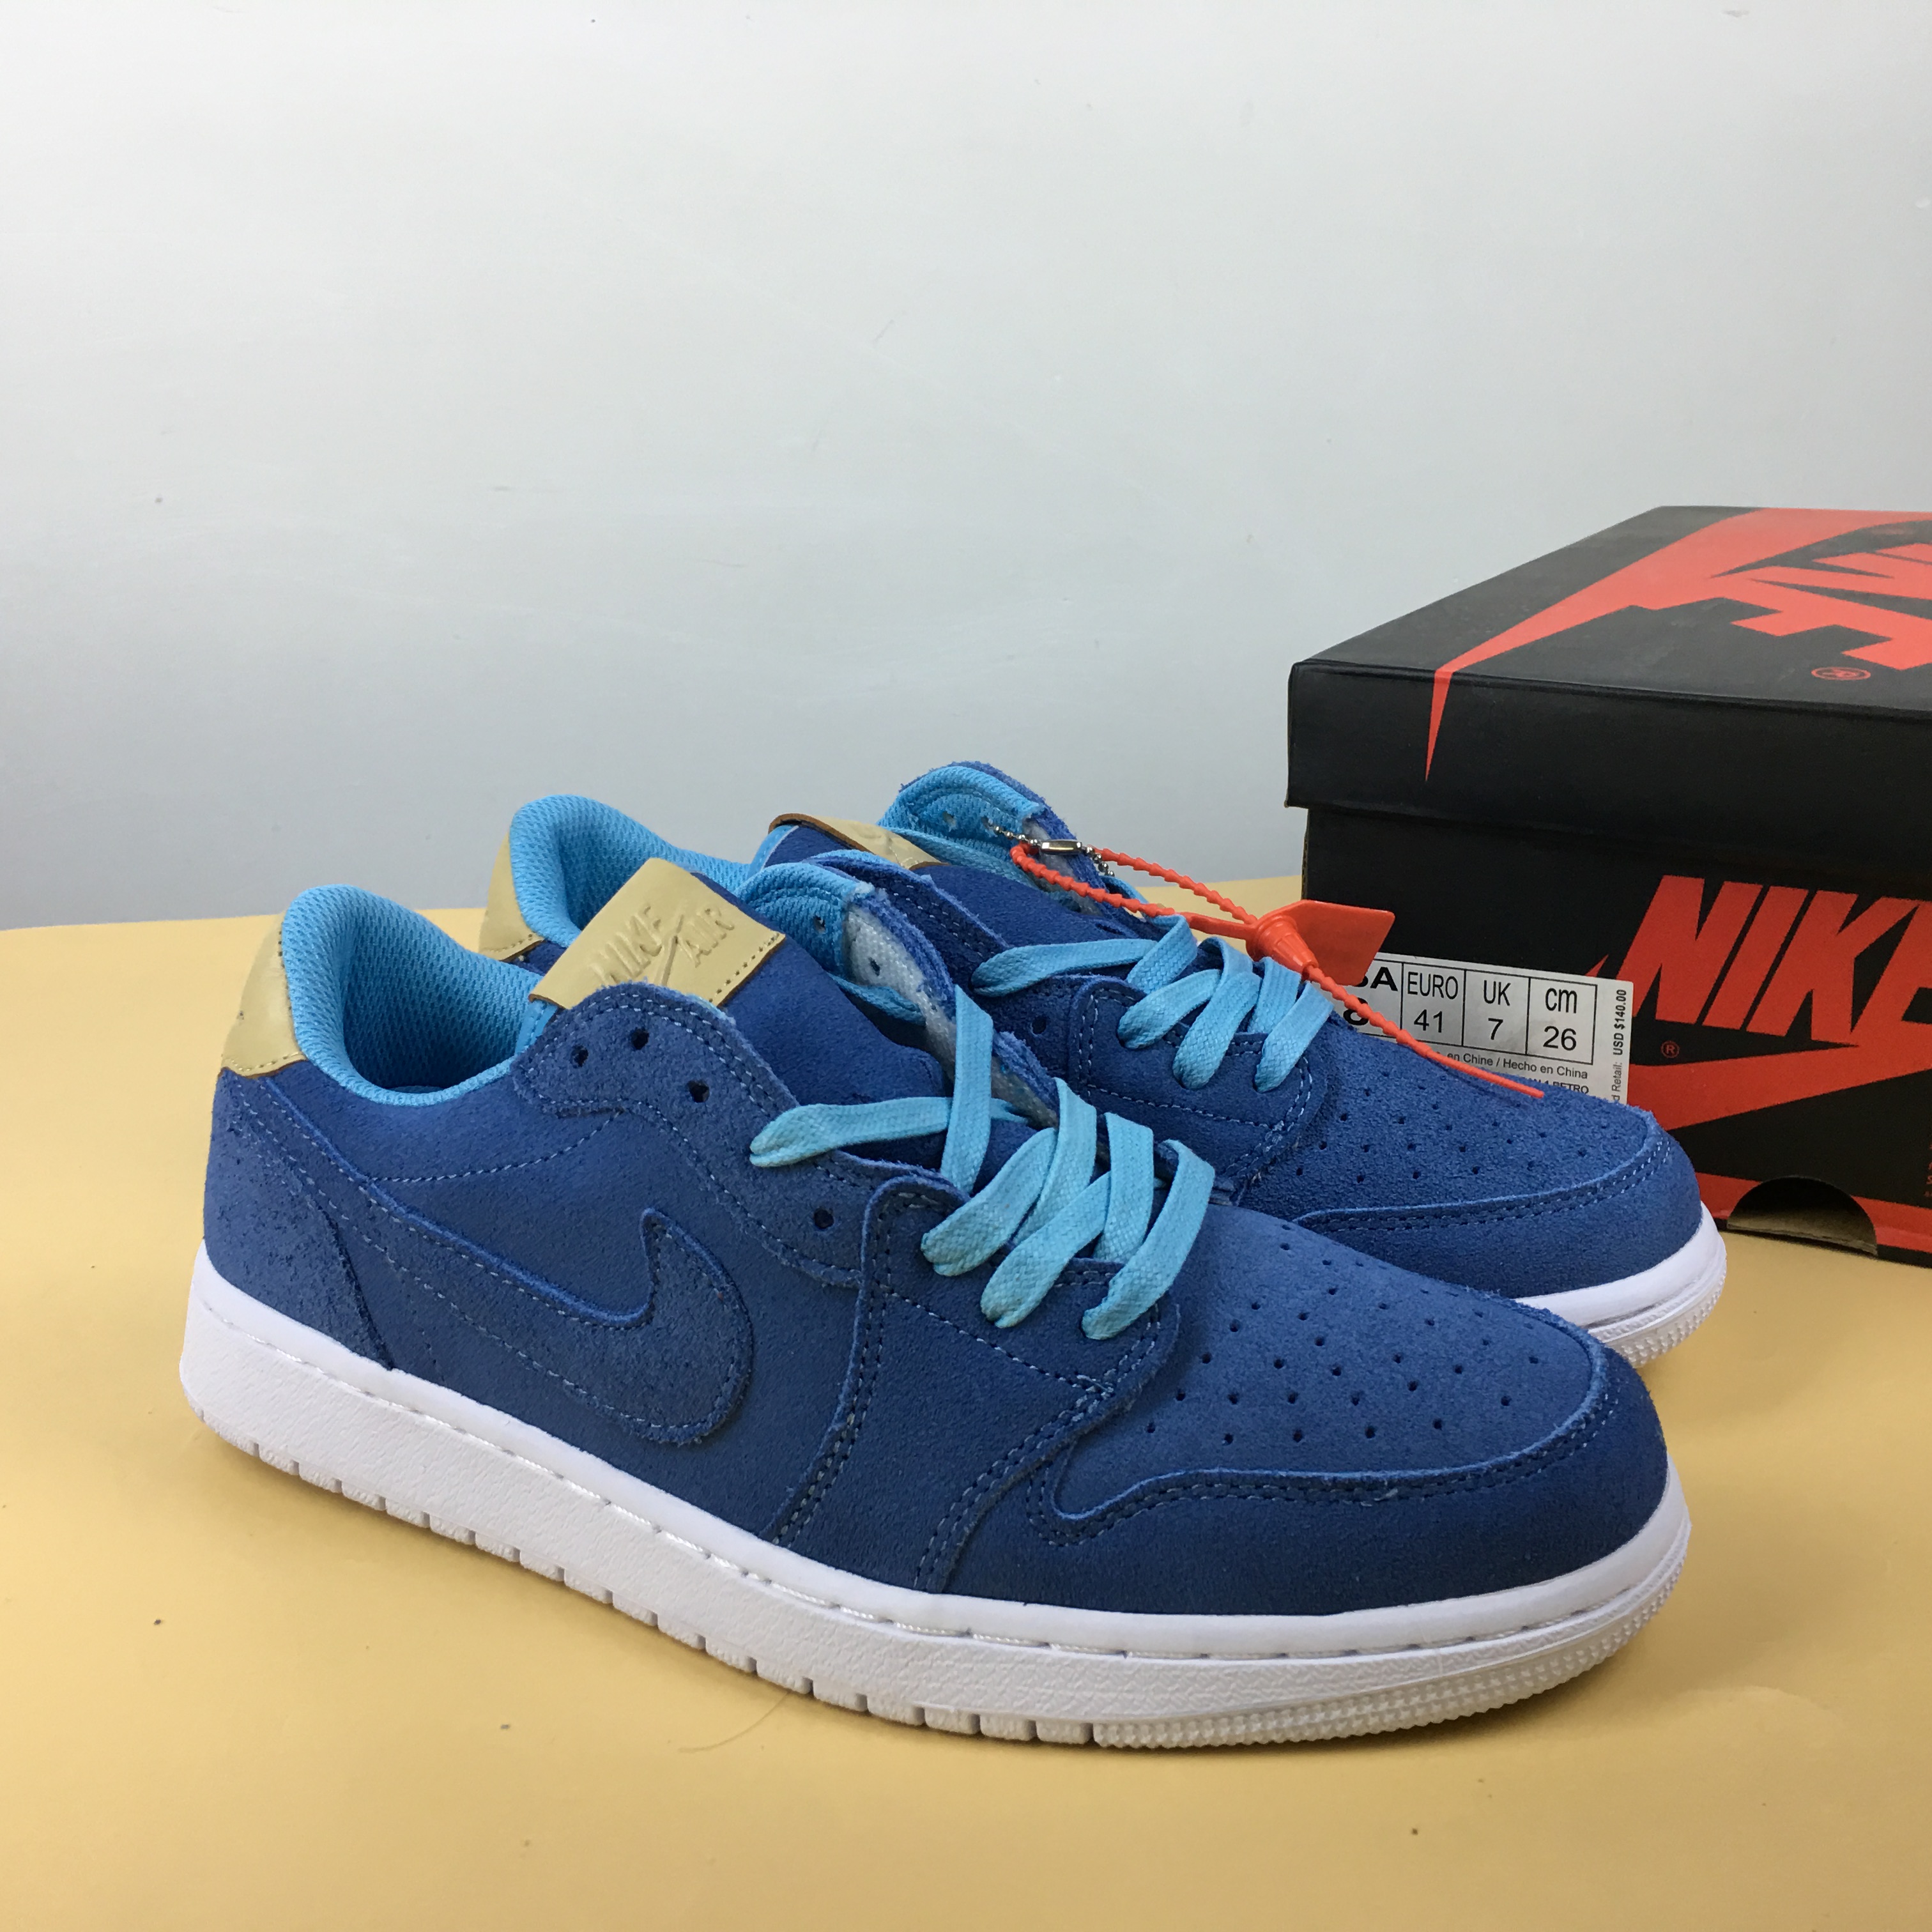 Women Air Jordan 1 Low “Tan” PRM Blue Shoes